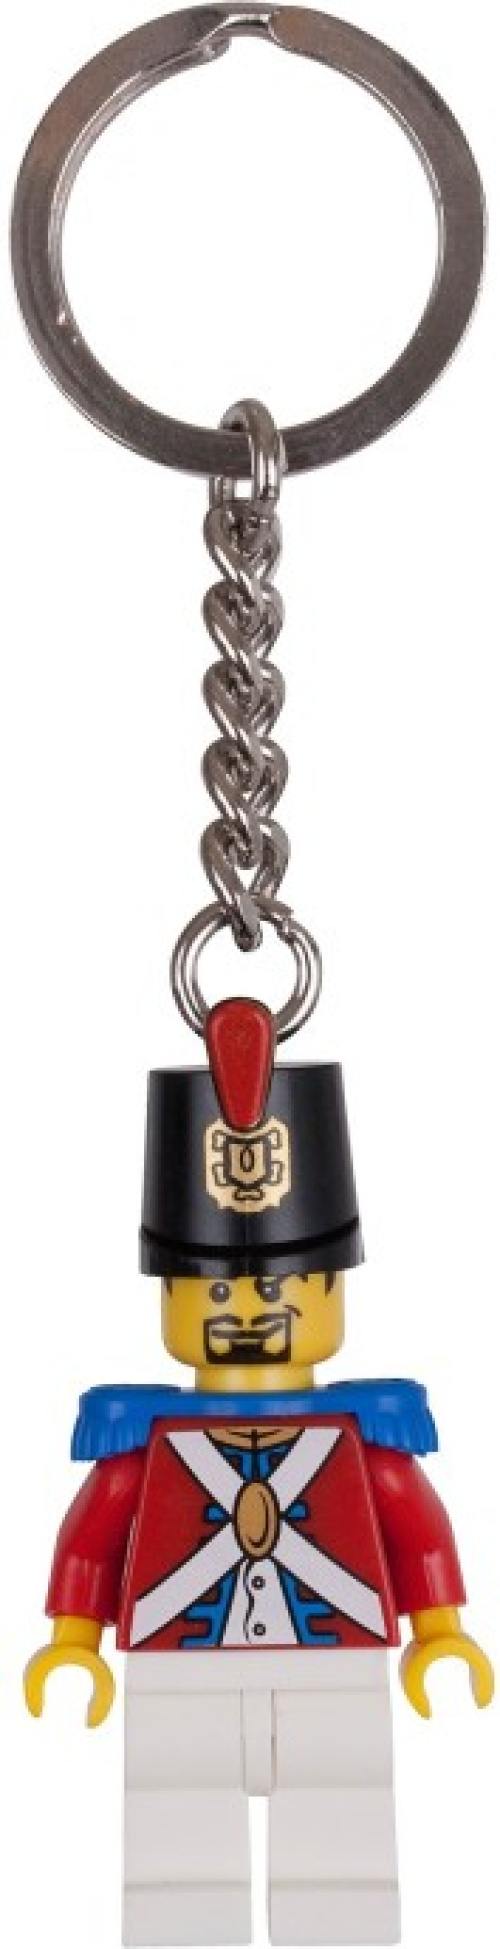 852749-1 Pirates Soldier Key Chain